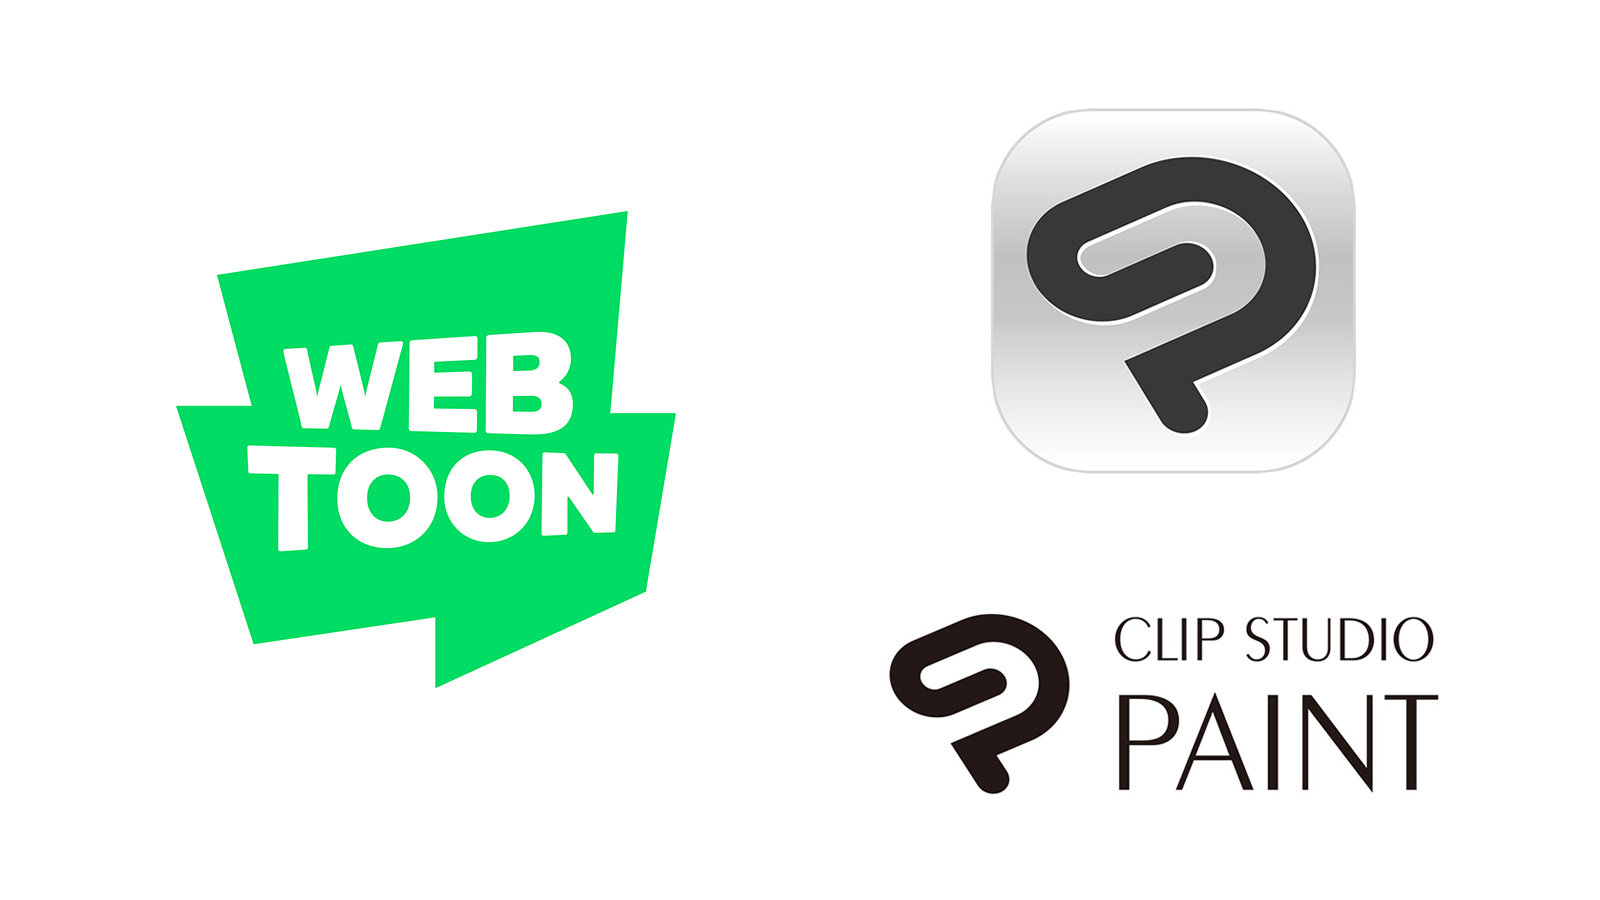 Clip Studio Paint launches direct upload feature for webcomics with WEBTOON CANVAS